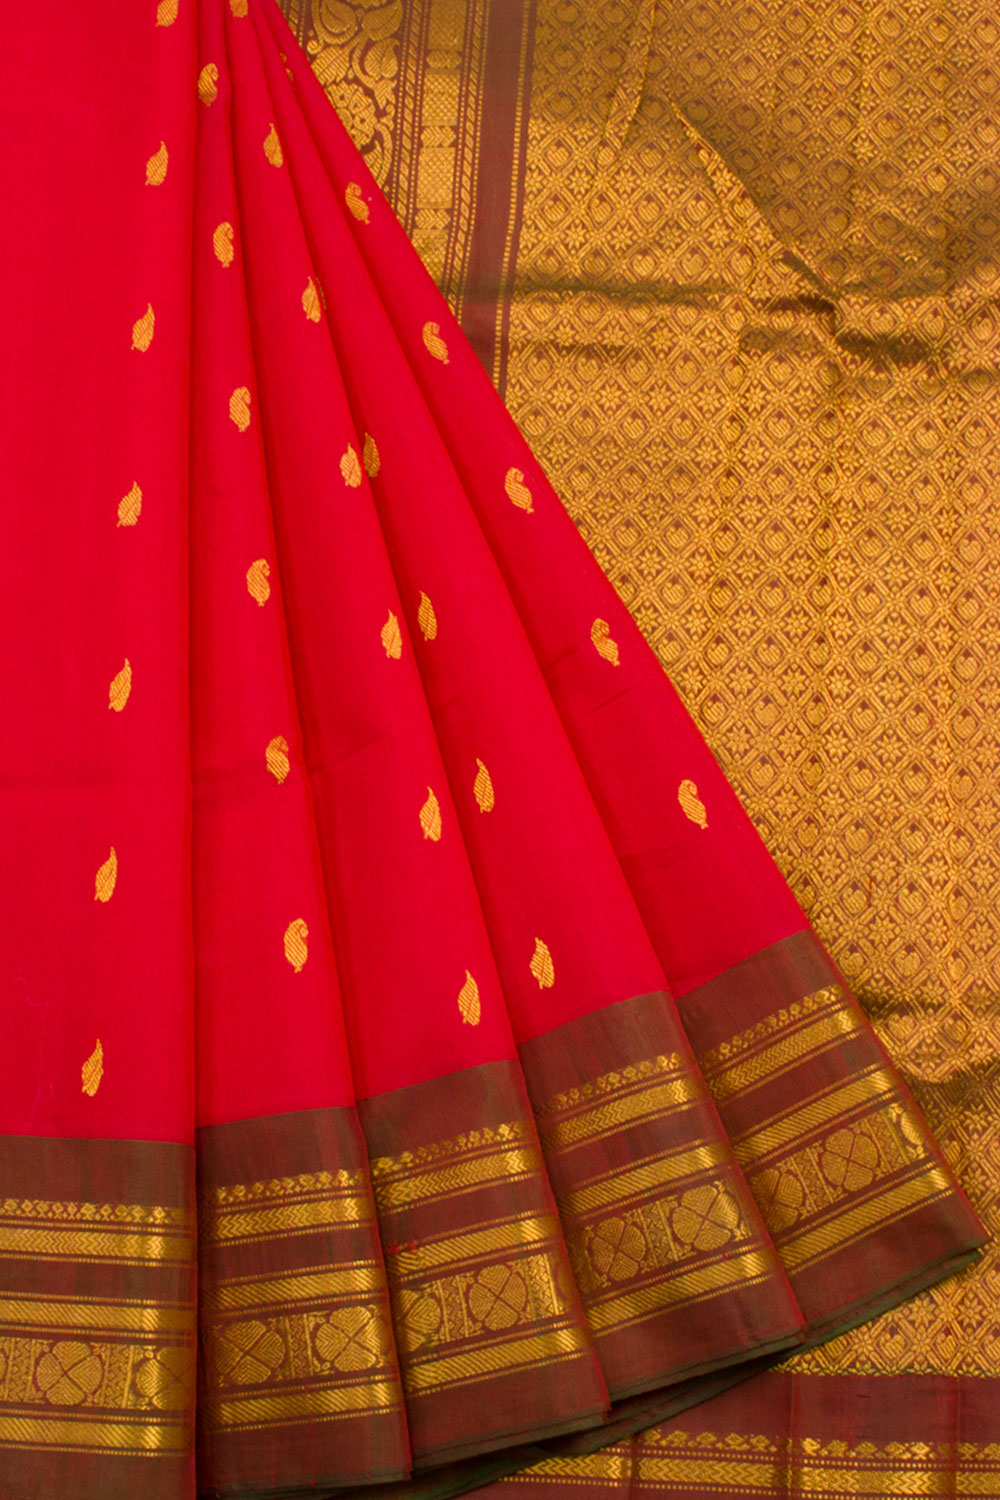 Red Handloom Gadwal Silk Cotton Saree 10060532